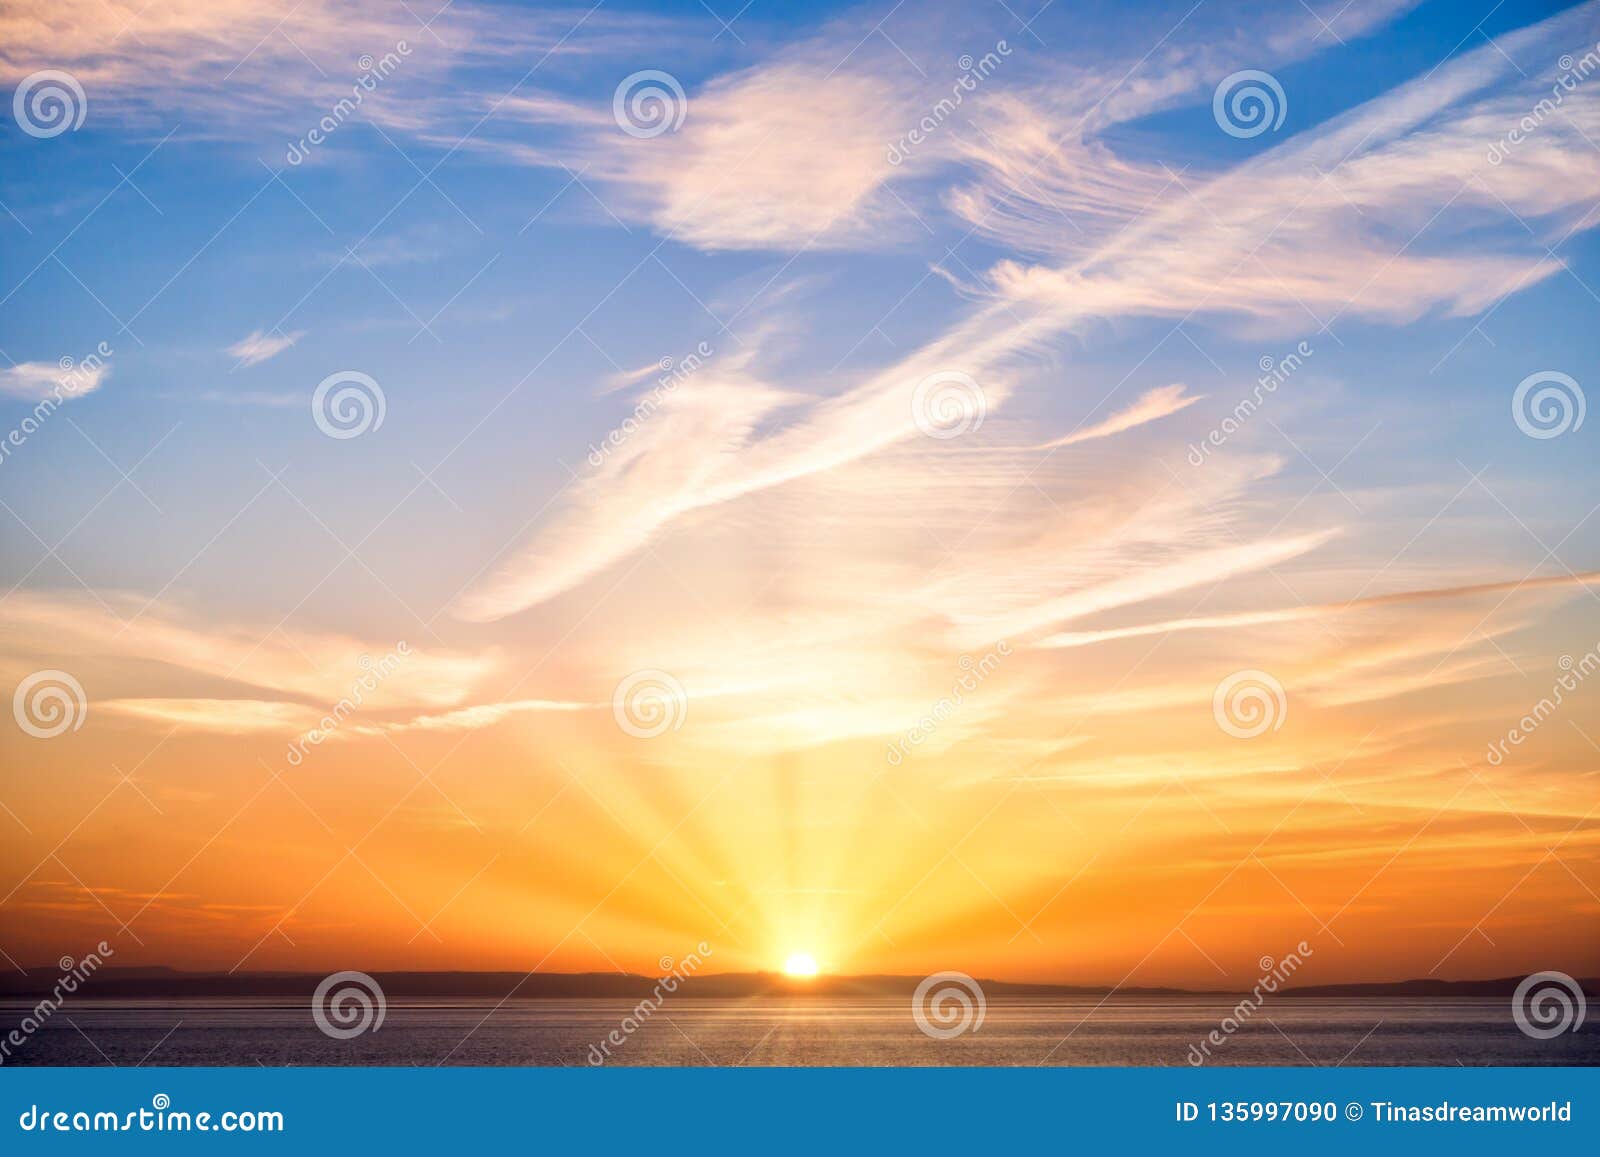 sunrise with sun, sun rays, blue sky, clouds and sea